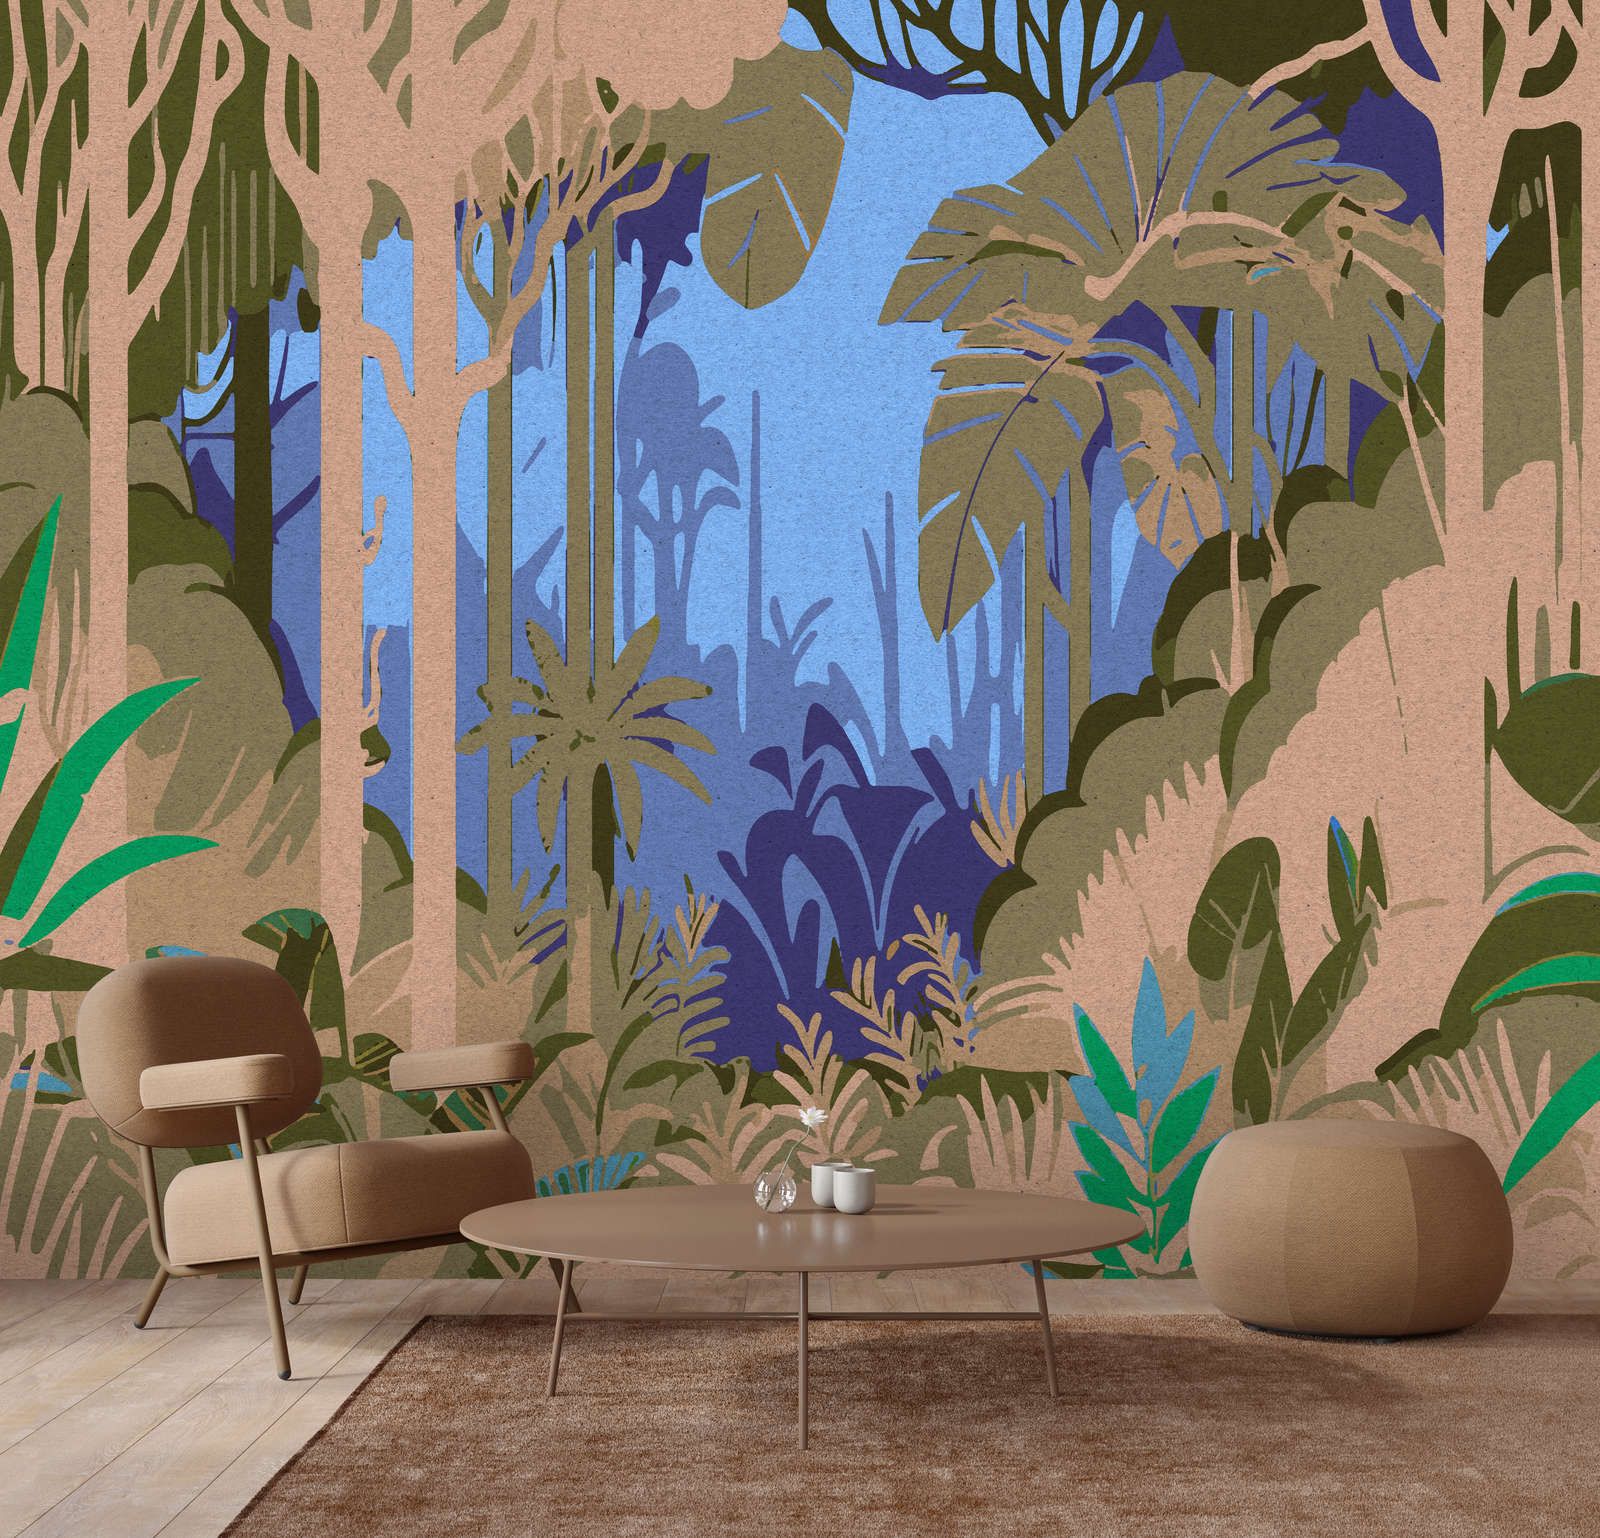             Fotomural »azura« - Motivo abstracto selva con textura de papel kraft - Tela no tejida mate y lisa
        